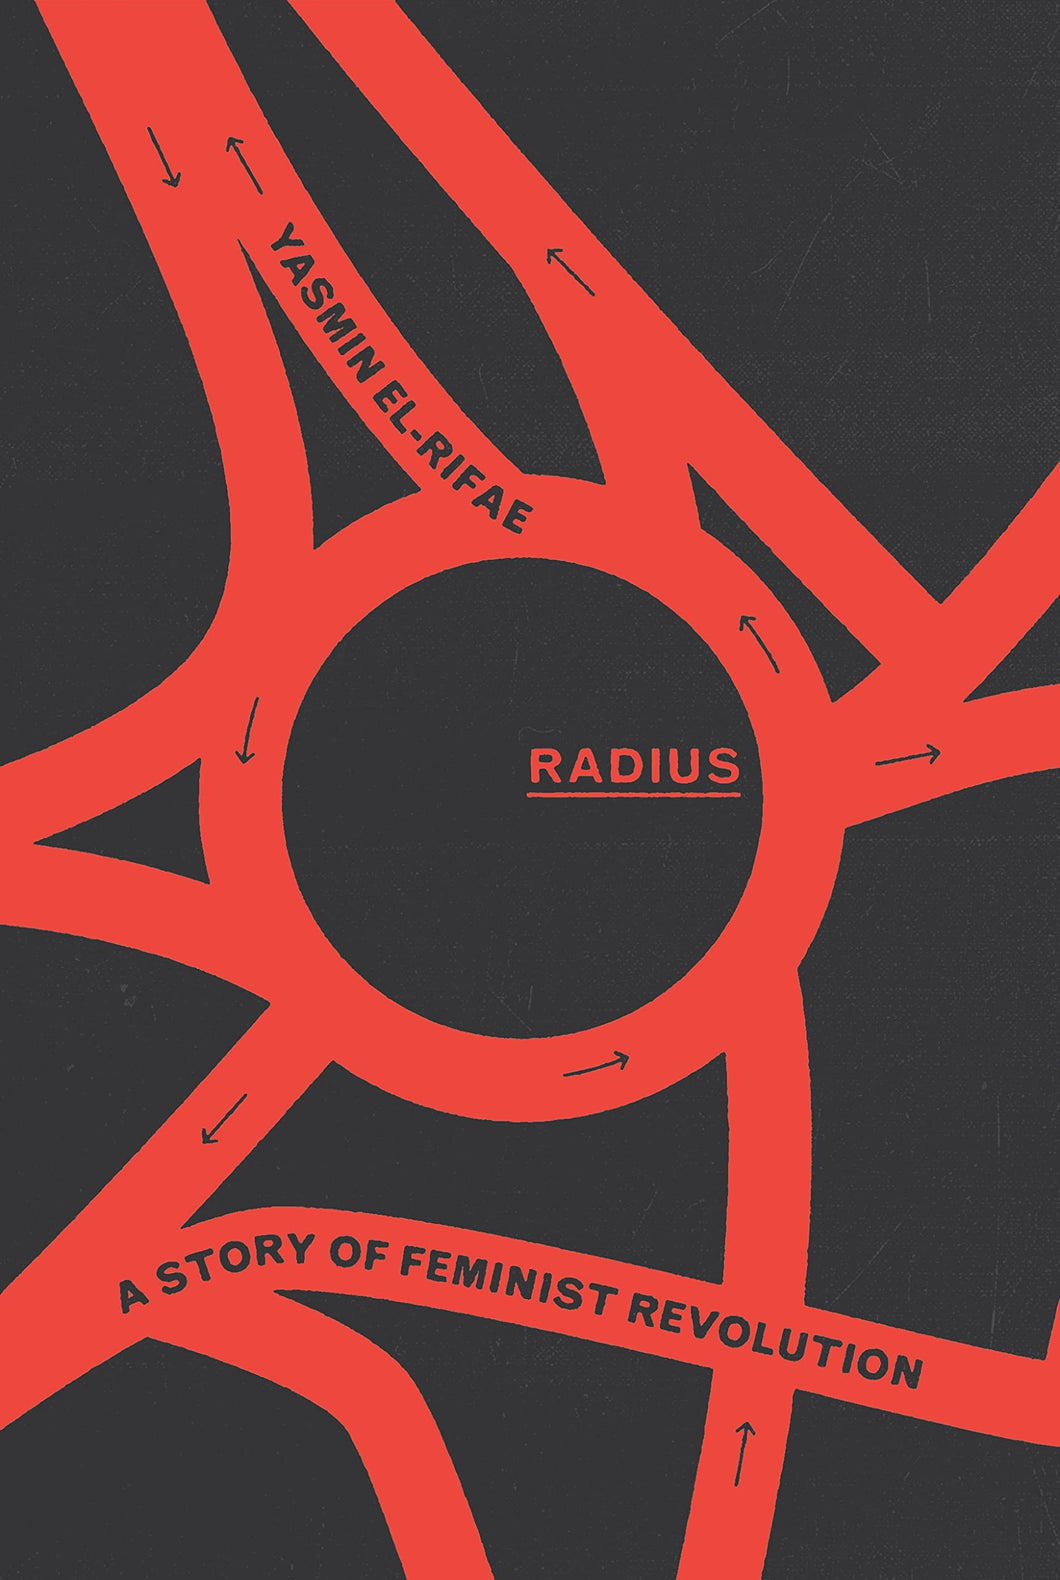 Radius: A Story of Feminist Revolution ร้านหนังสือและสิ่งของ เป็นร้านหนังสือภาษาอังกฤษหายาก และร้านกาแฟ หรือ บุ๊คคาเฟ่ ตั้งอยู่สุขุมวิท กรุงเทพ